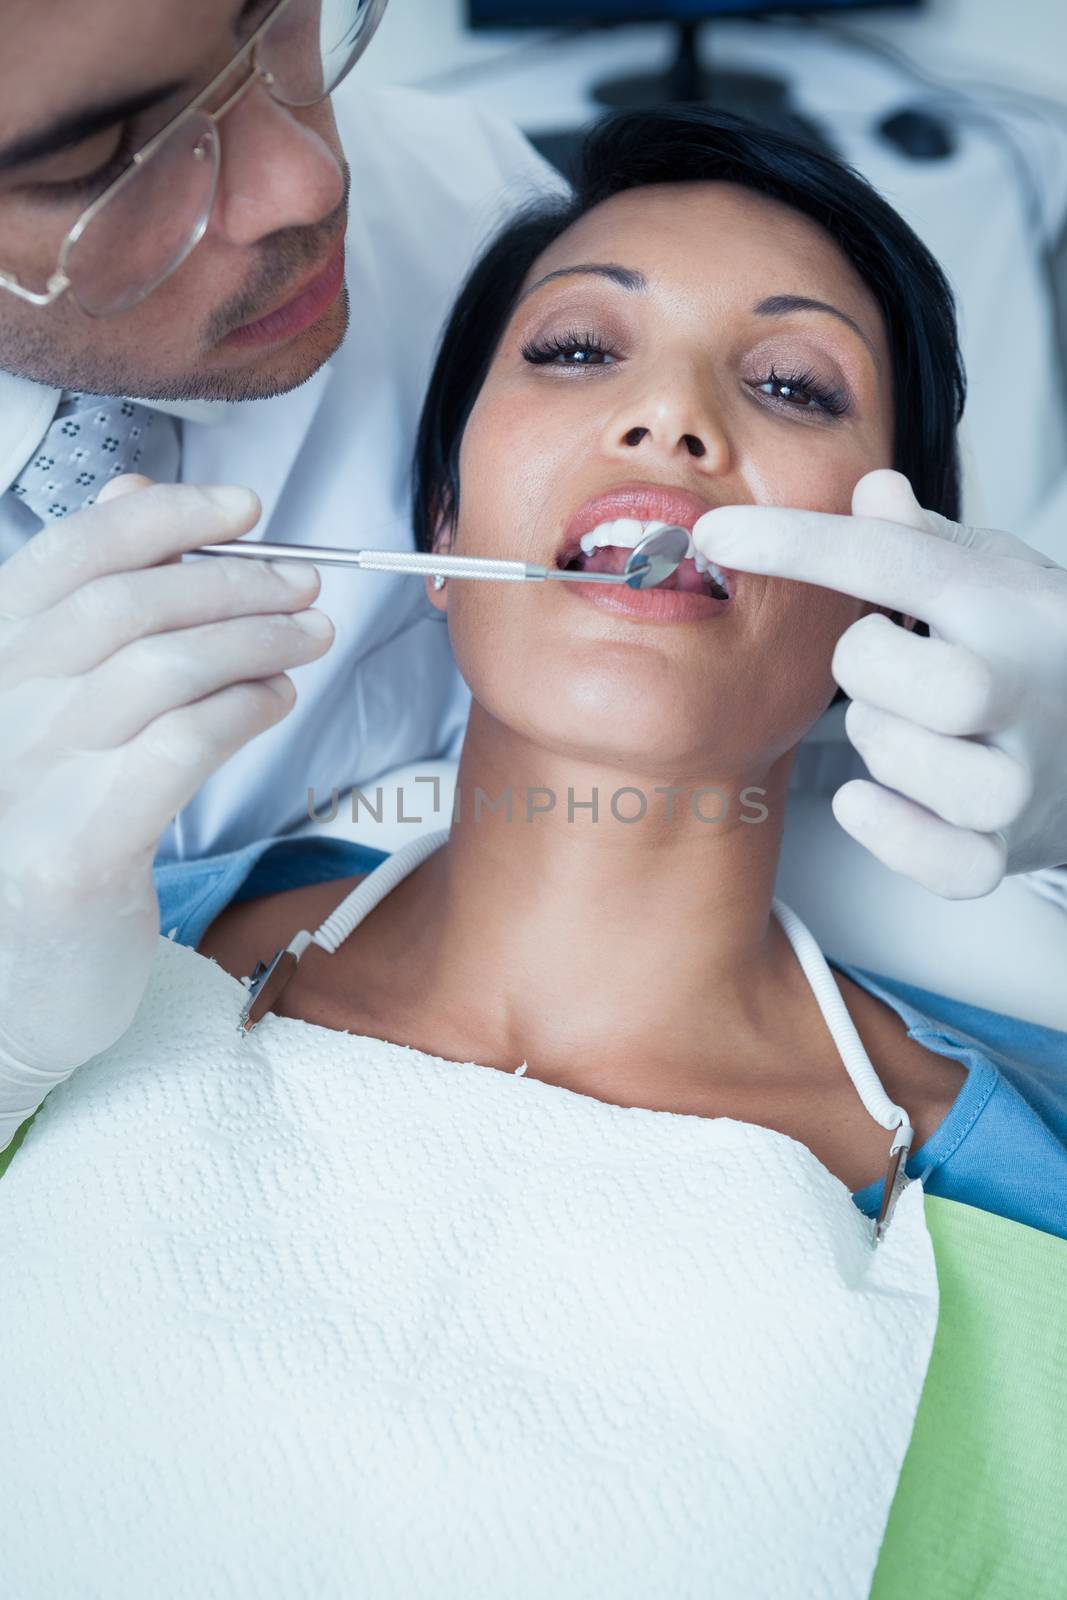 Male dentist examining womans teeth by Wavebreakmedia